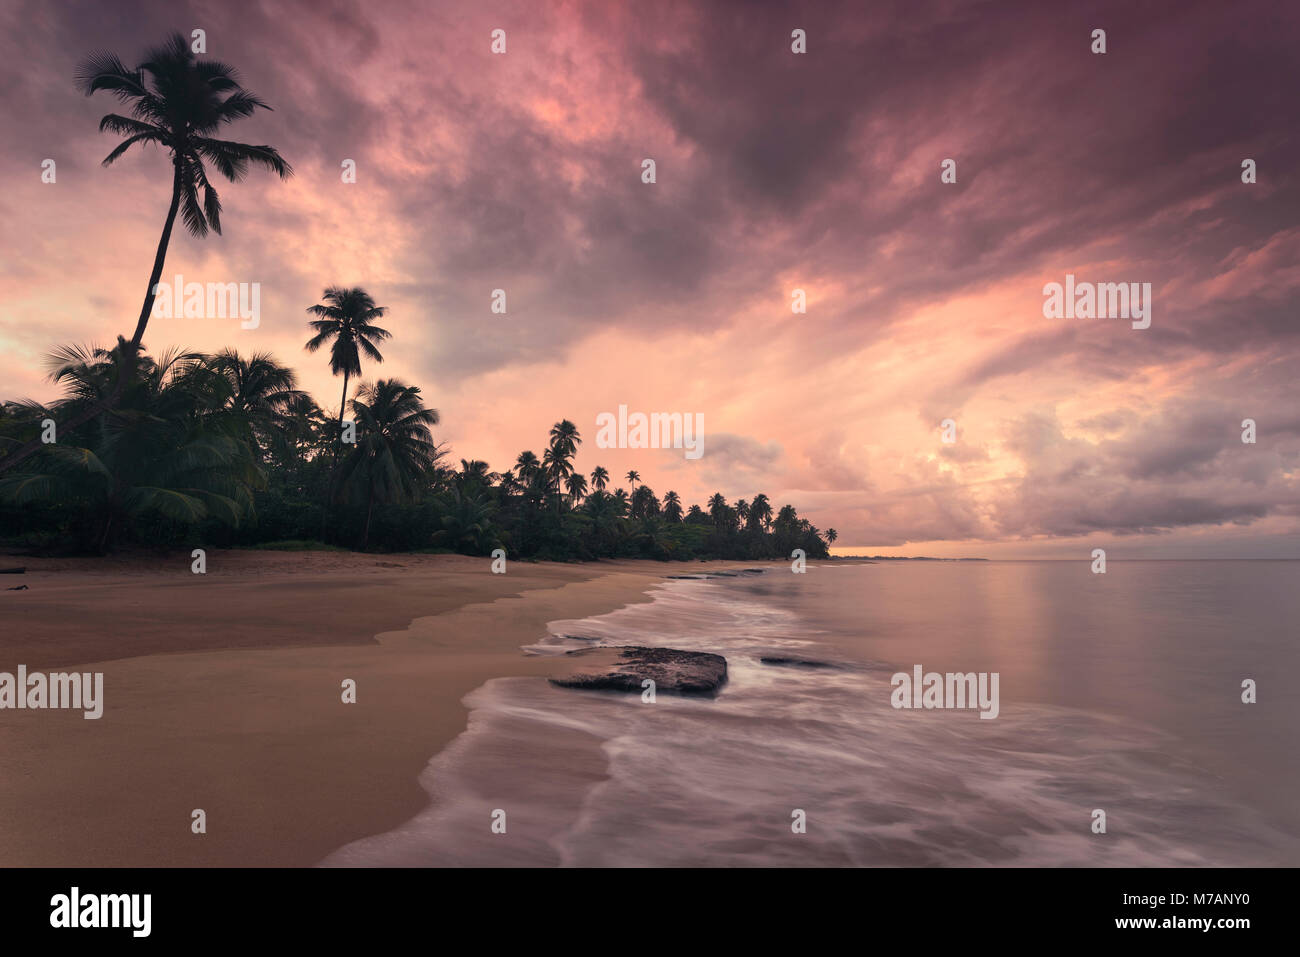 Karibischer Traum Strand im Sonnenuntergang, Punta Vacia, Puerto Rico, Karibik Insel, Stockfoto